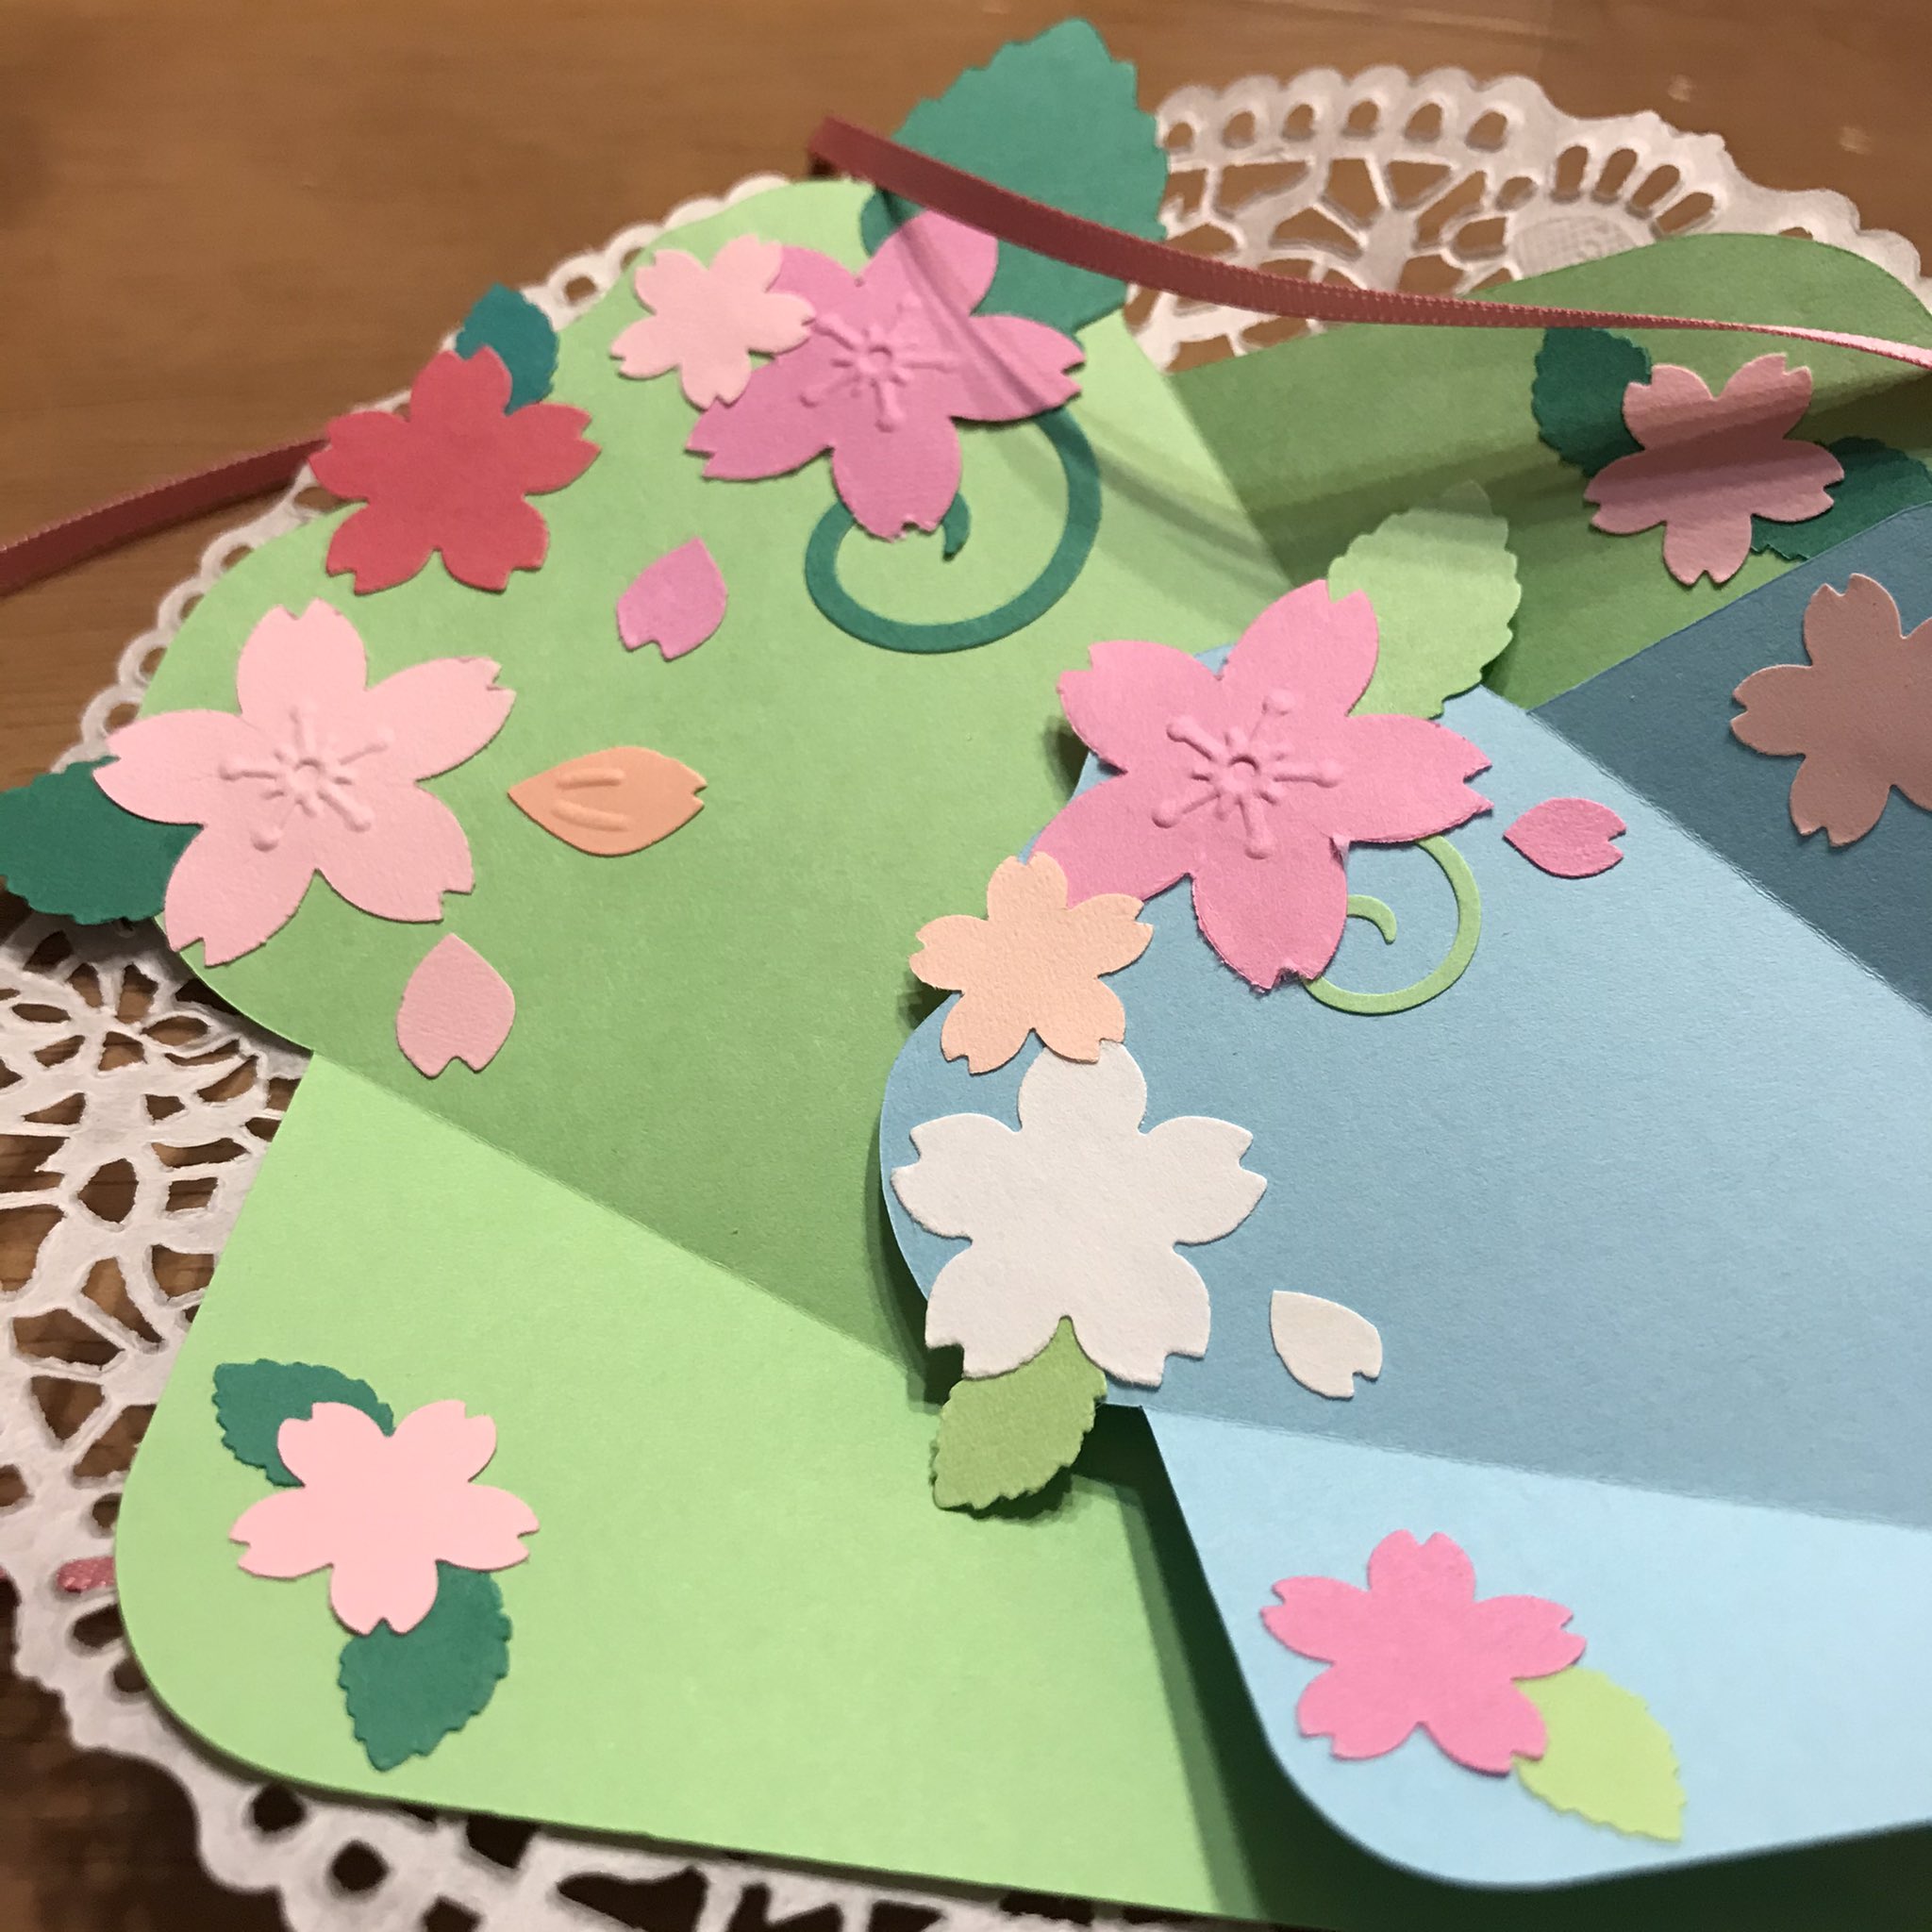 توییتر Sizuku工房 در توییتر 桜 メッセージカード作りました 大きさは 定形の封筒に入るくらいです 桜カード 桜メッセージカード メッセージカード クラフトパンチ ハンドメイド Sakura T Co Eabm5cyvoo